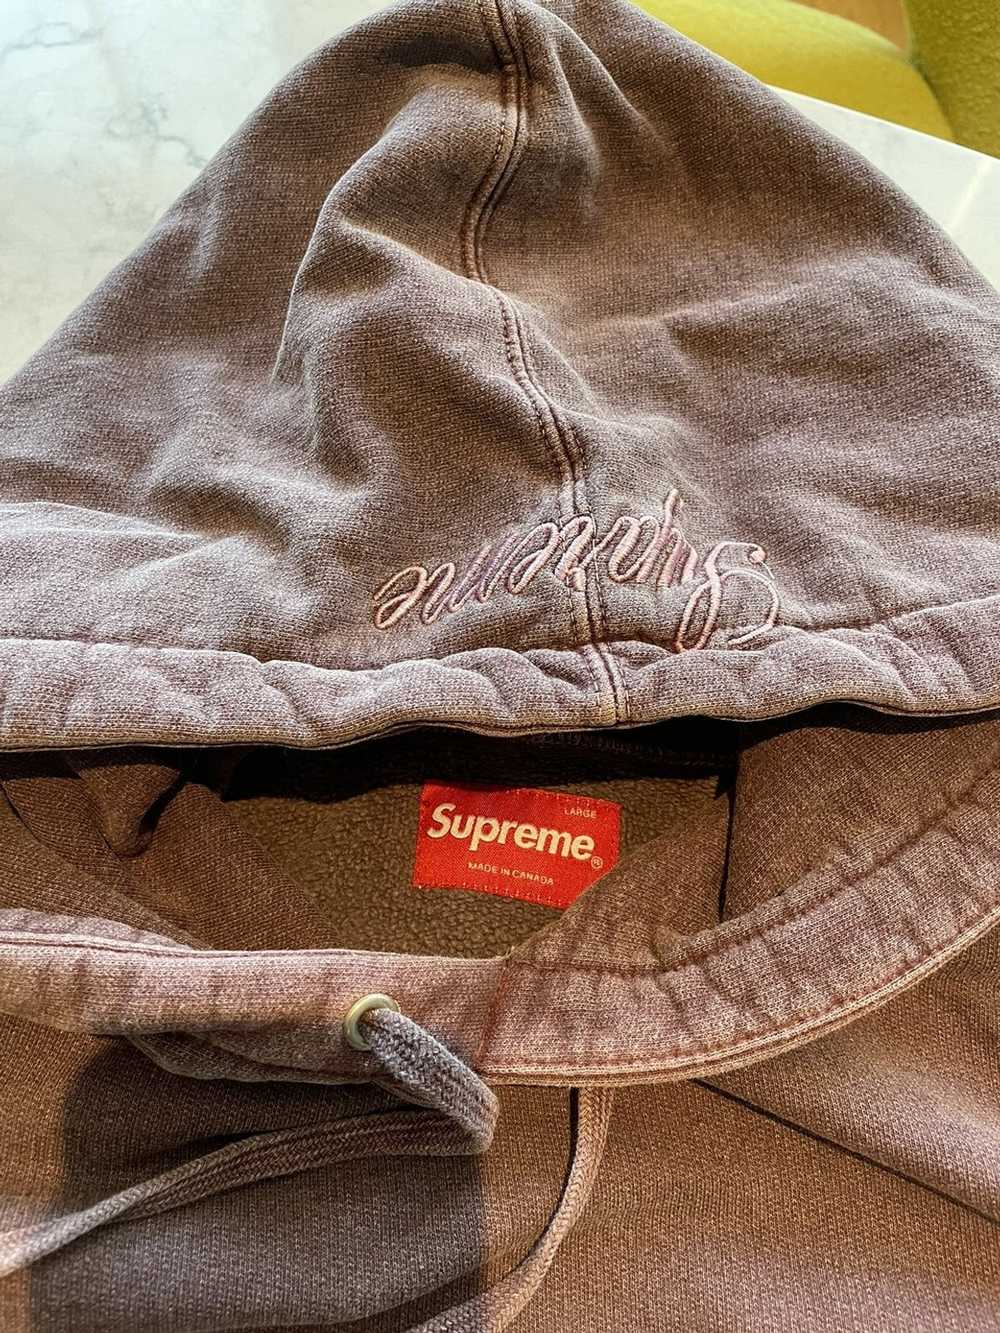 Supreme Supreme hoodie size large - image 2